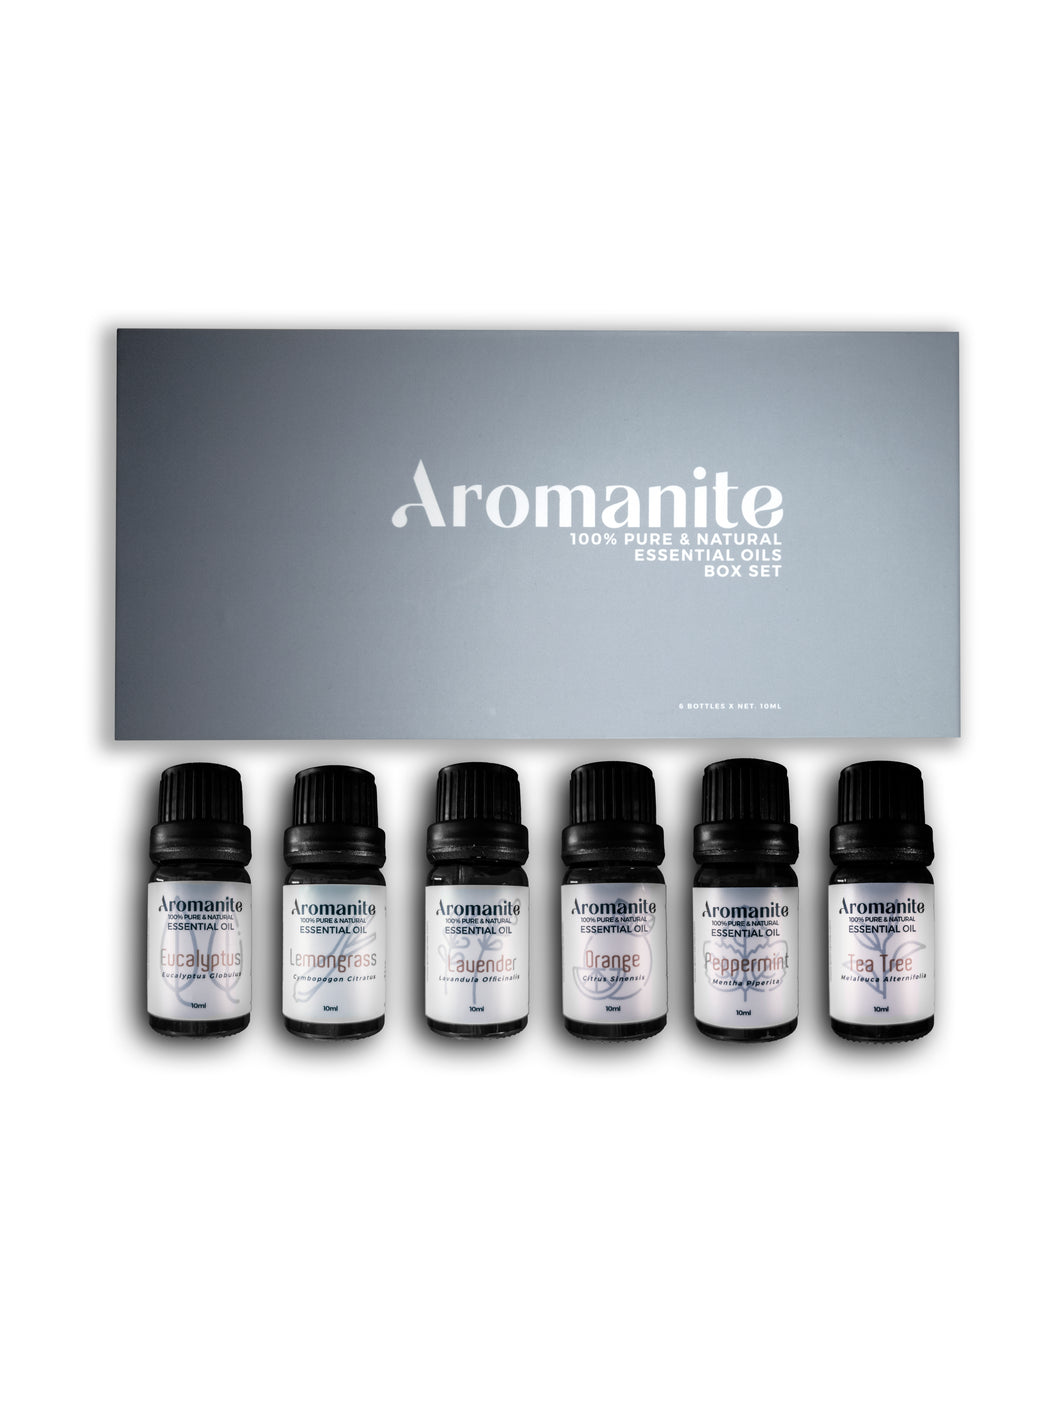 Aromanite Essential Oils Box Set - 6 Pack (10ml) - Eucalyptus, Lavender, Lemongrass, Peppermint, Orange, Tea Tree